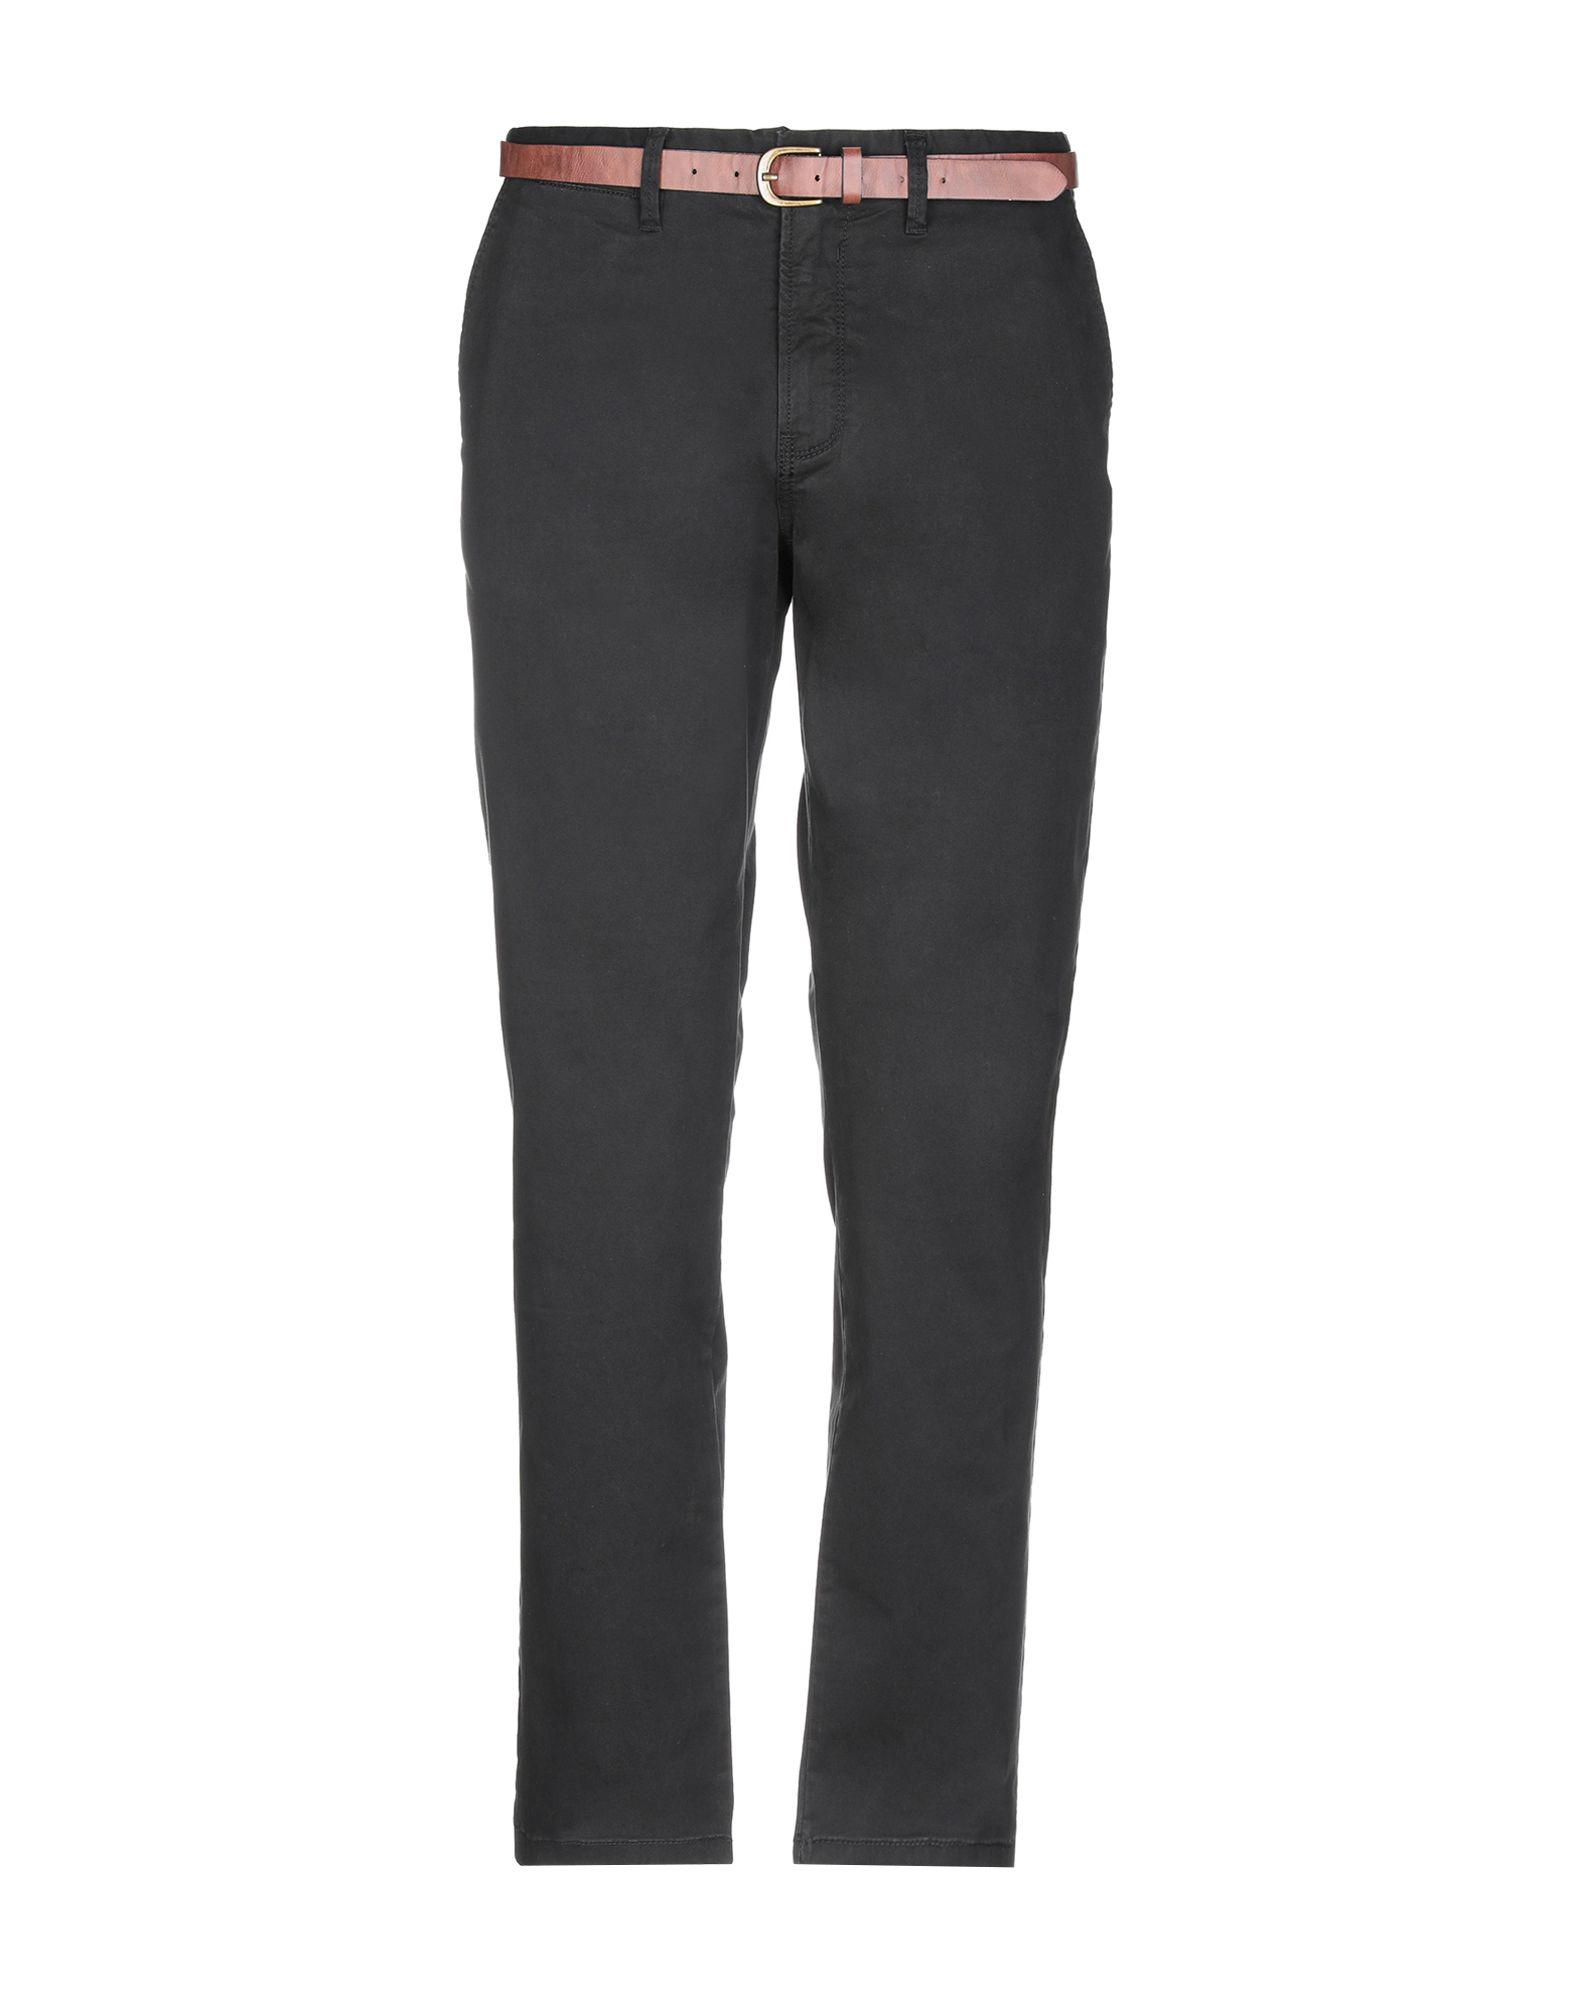 Jack & Jones Cotton Casual Pants in Black for Men - Lyst